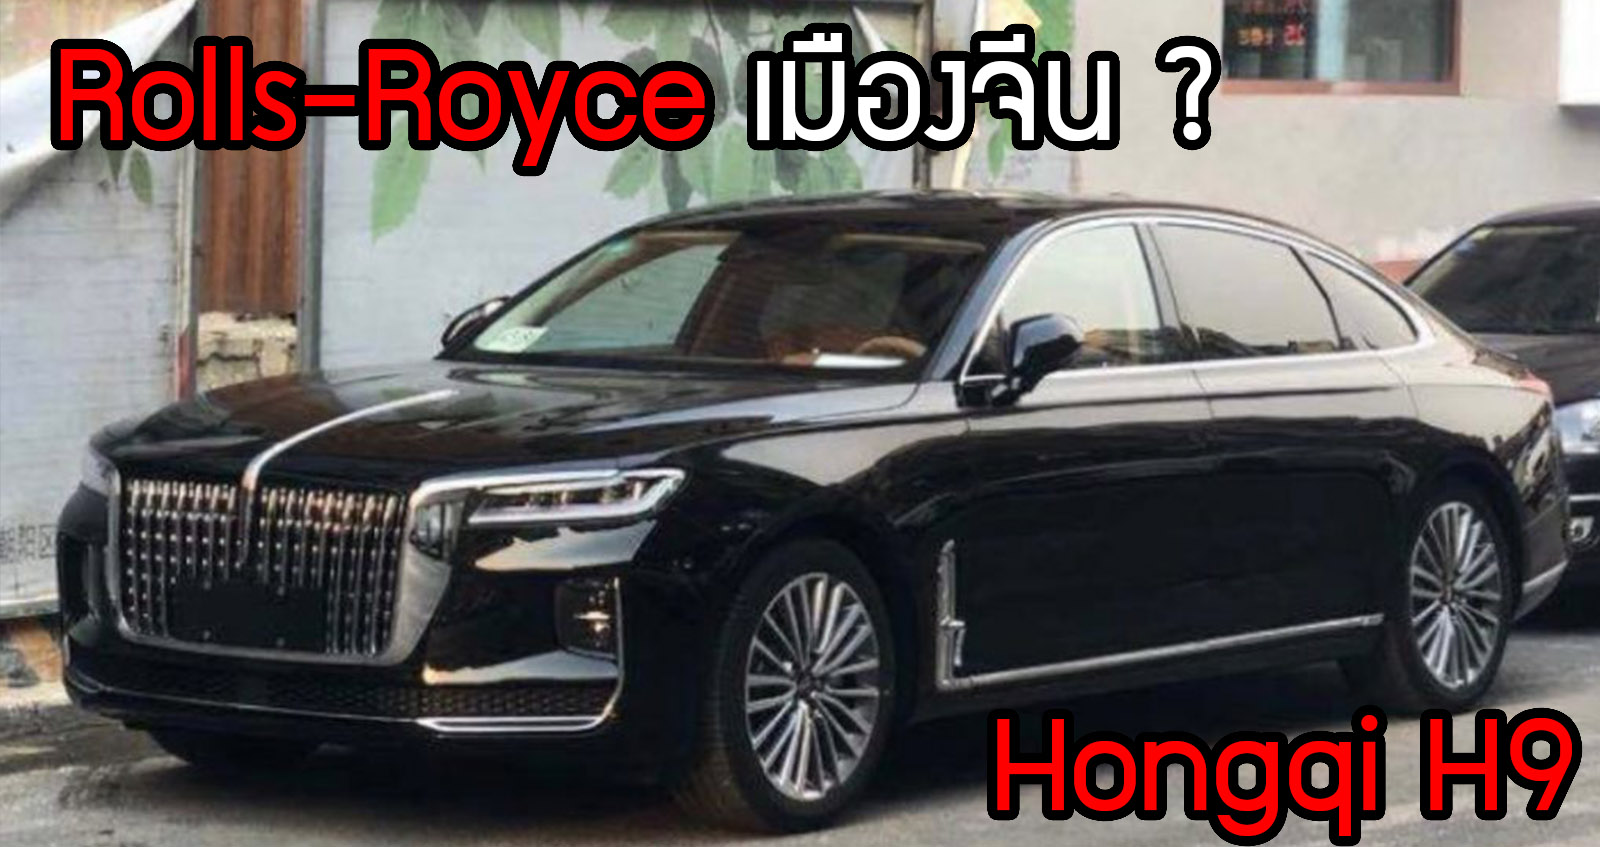 Rolls-Royce เมืองจีน ? Hongqi H9 เตรียมเปิดตัวเร็วๆนี้